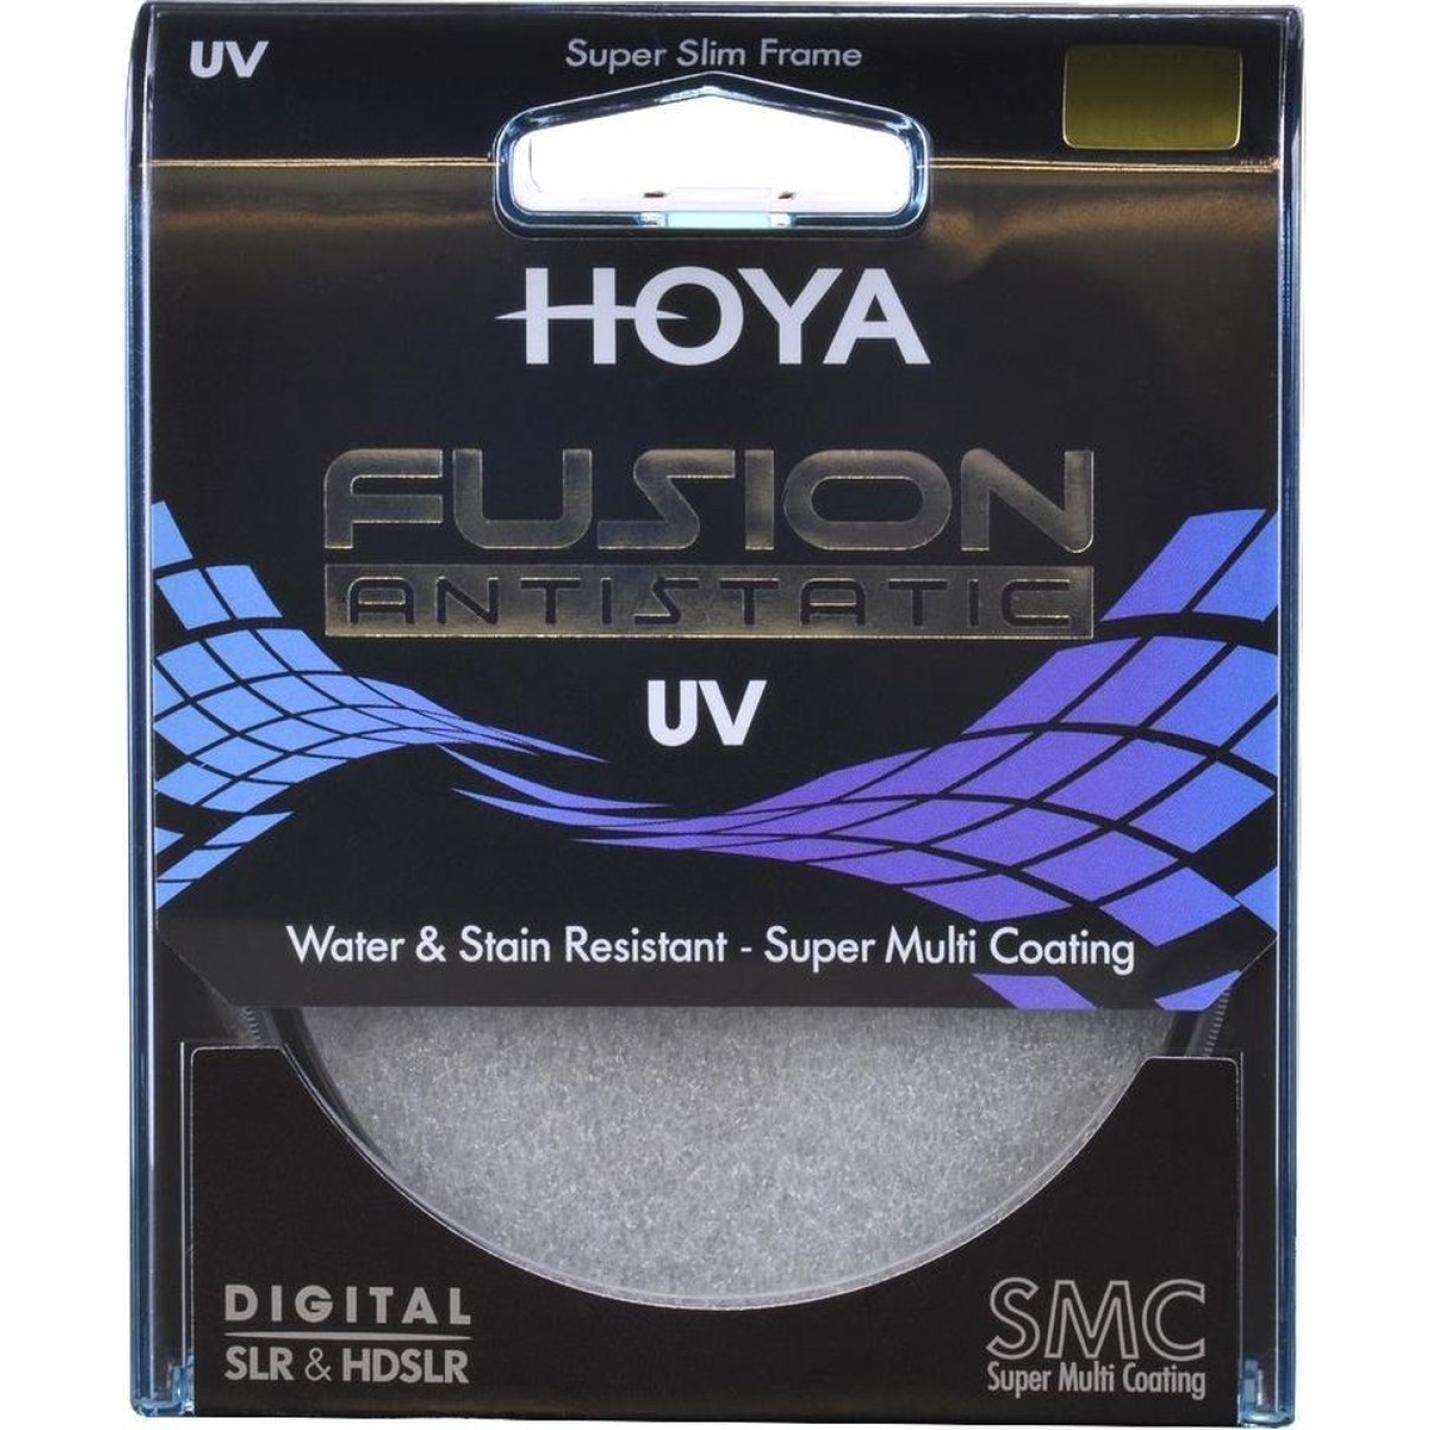 UV filter Hoya - Fusion Antistatic - Slim Frame - 77mm 2